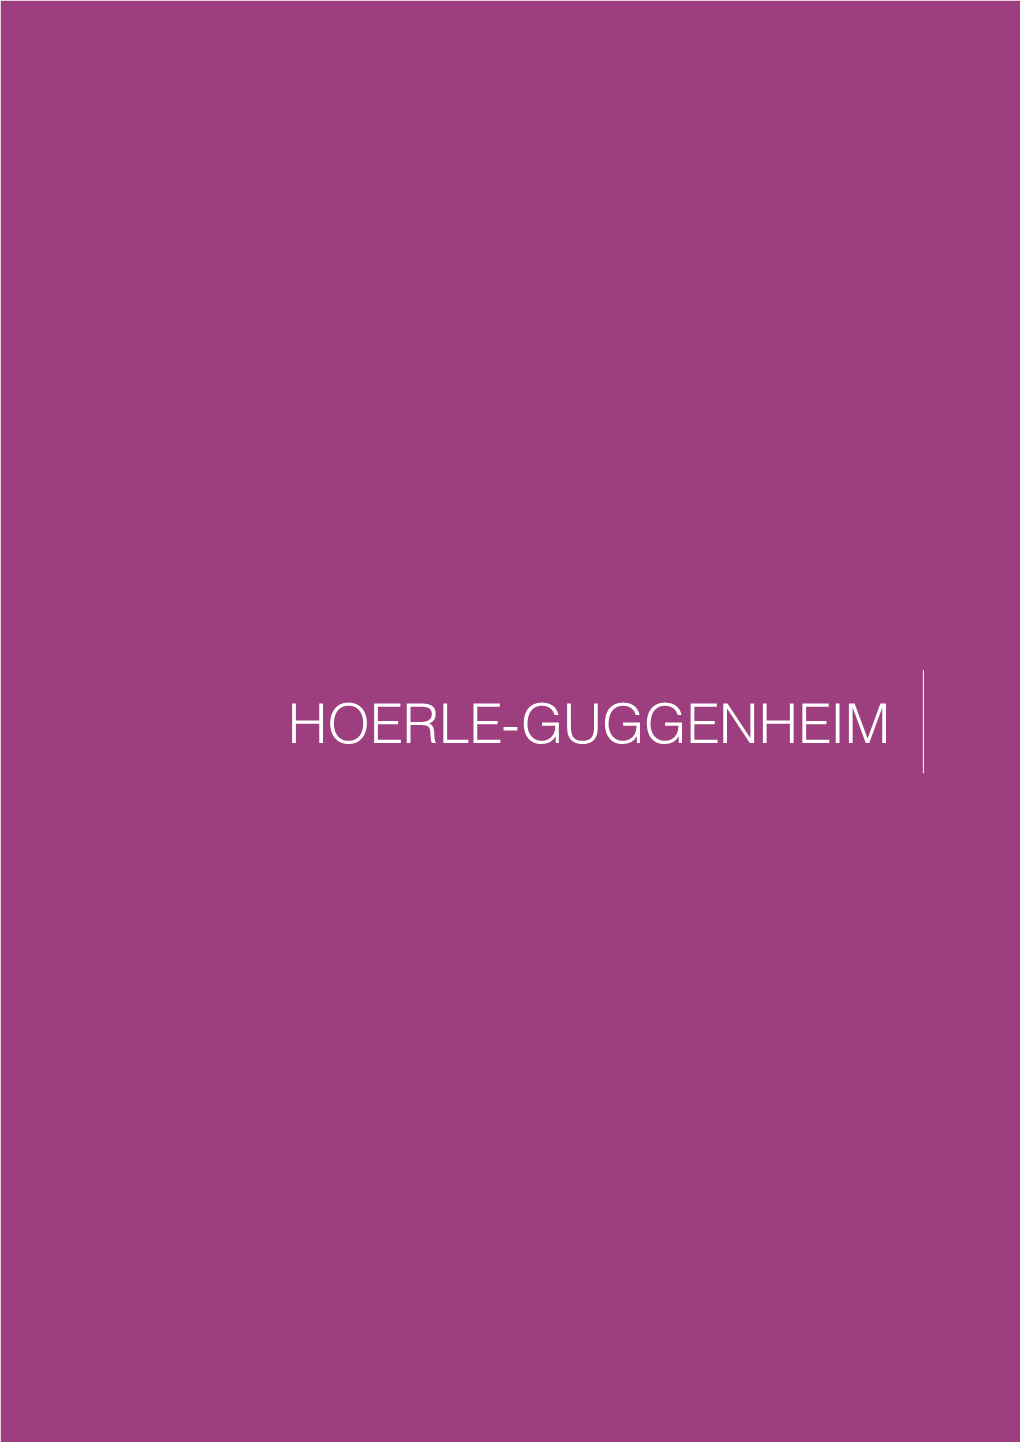 Hoerle-Guggenheim Gallery